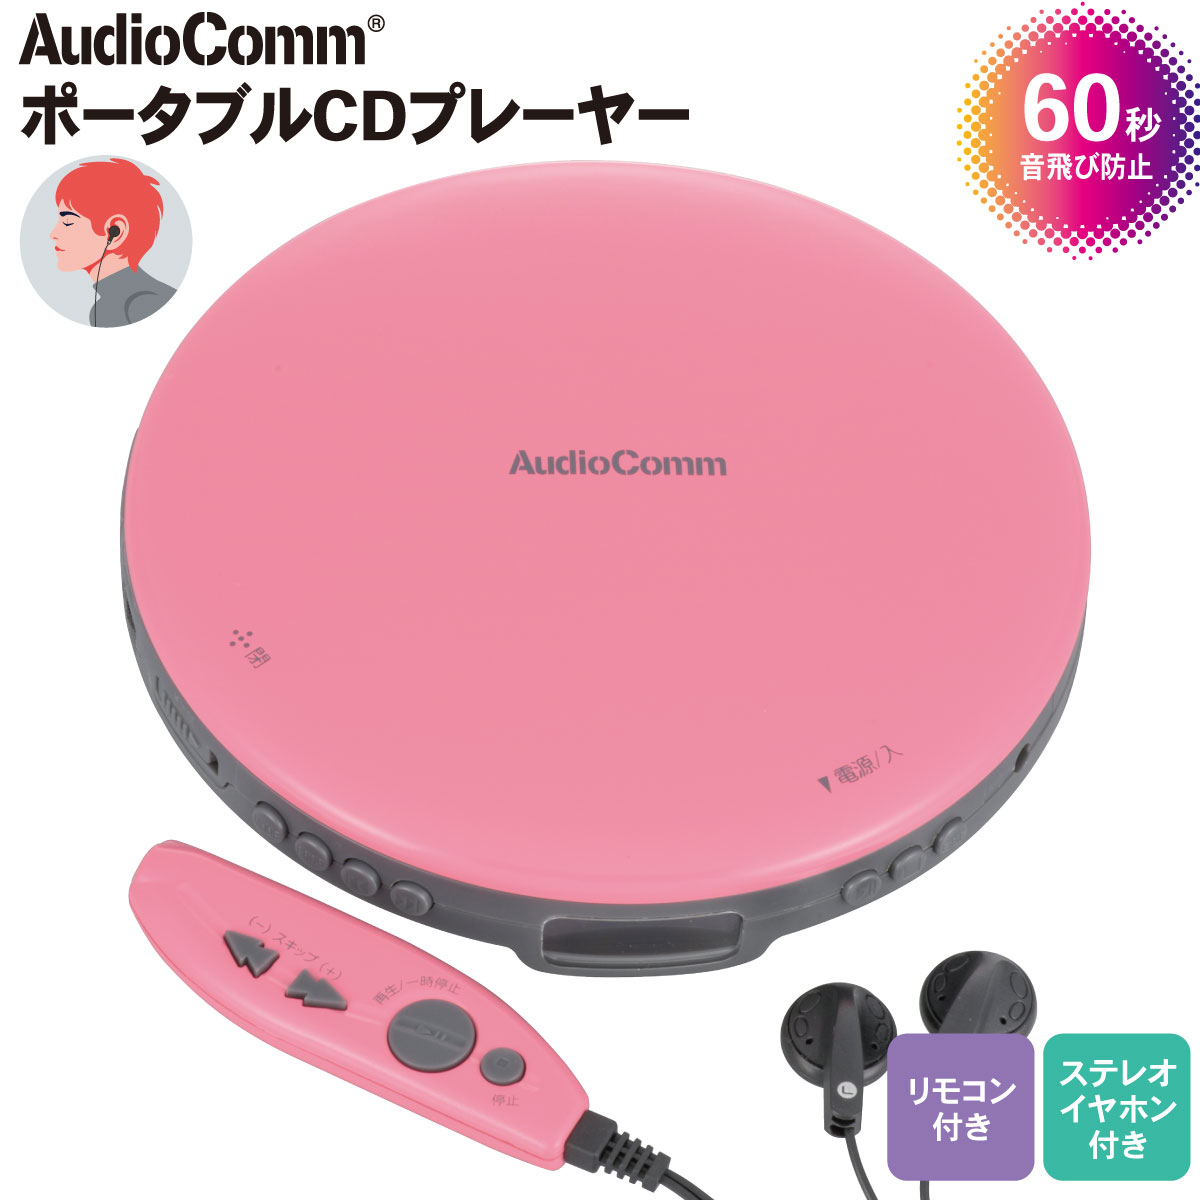 AudioComm ポータブルCDプレーヤー リモコン付き ピンク｜CDP-855Z-P 03-5004 オーム電機